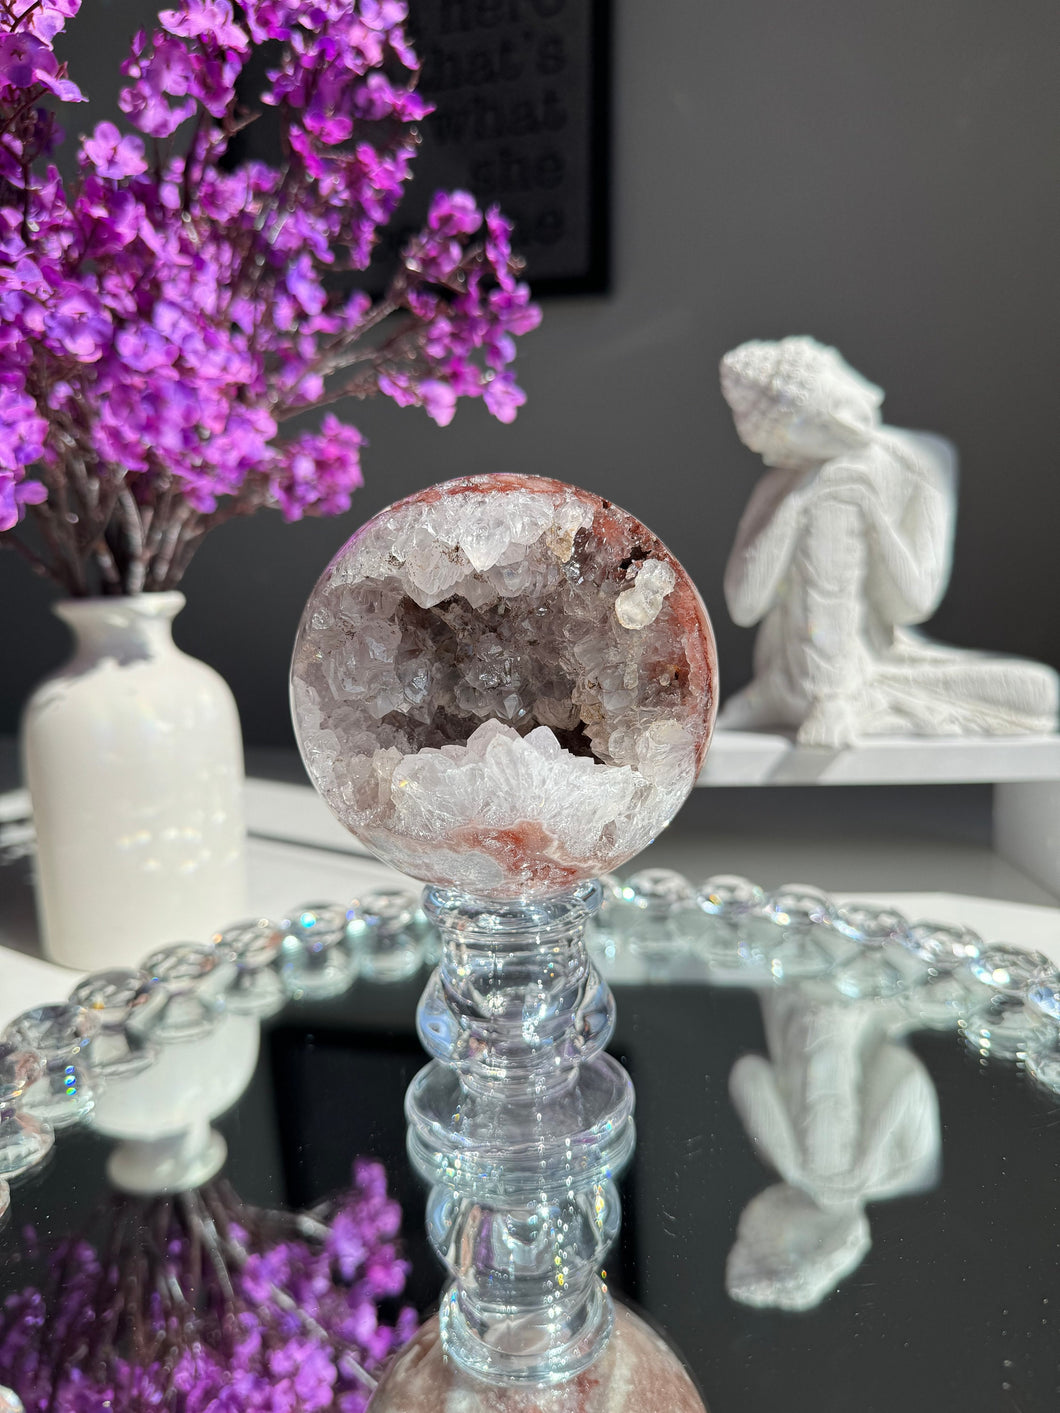 Druzy Pink amethyst sphere with quartz   2721